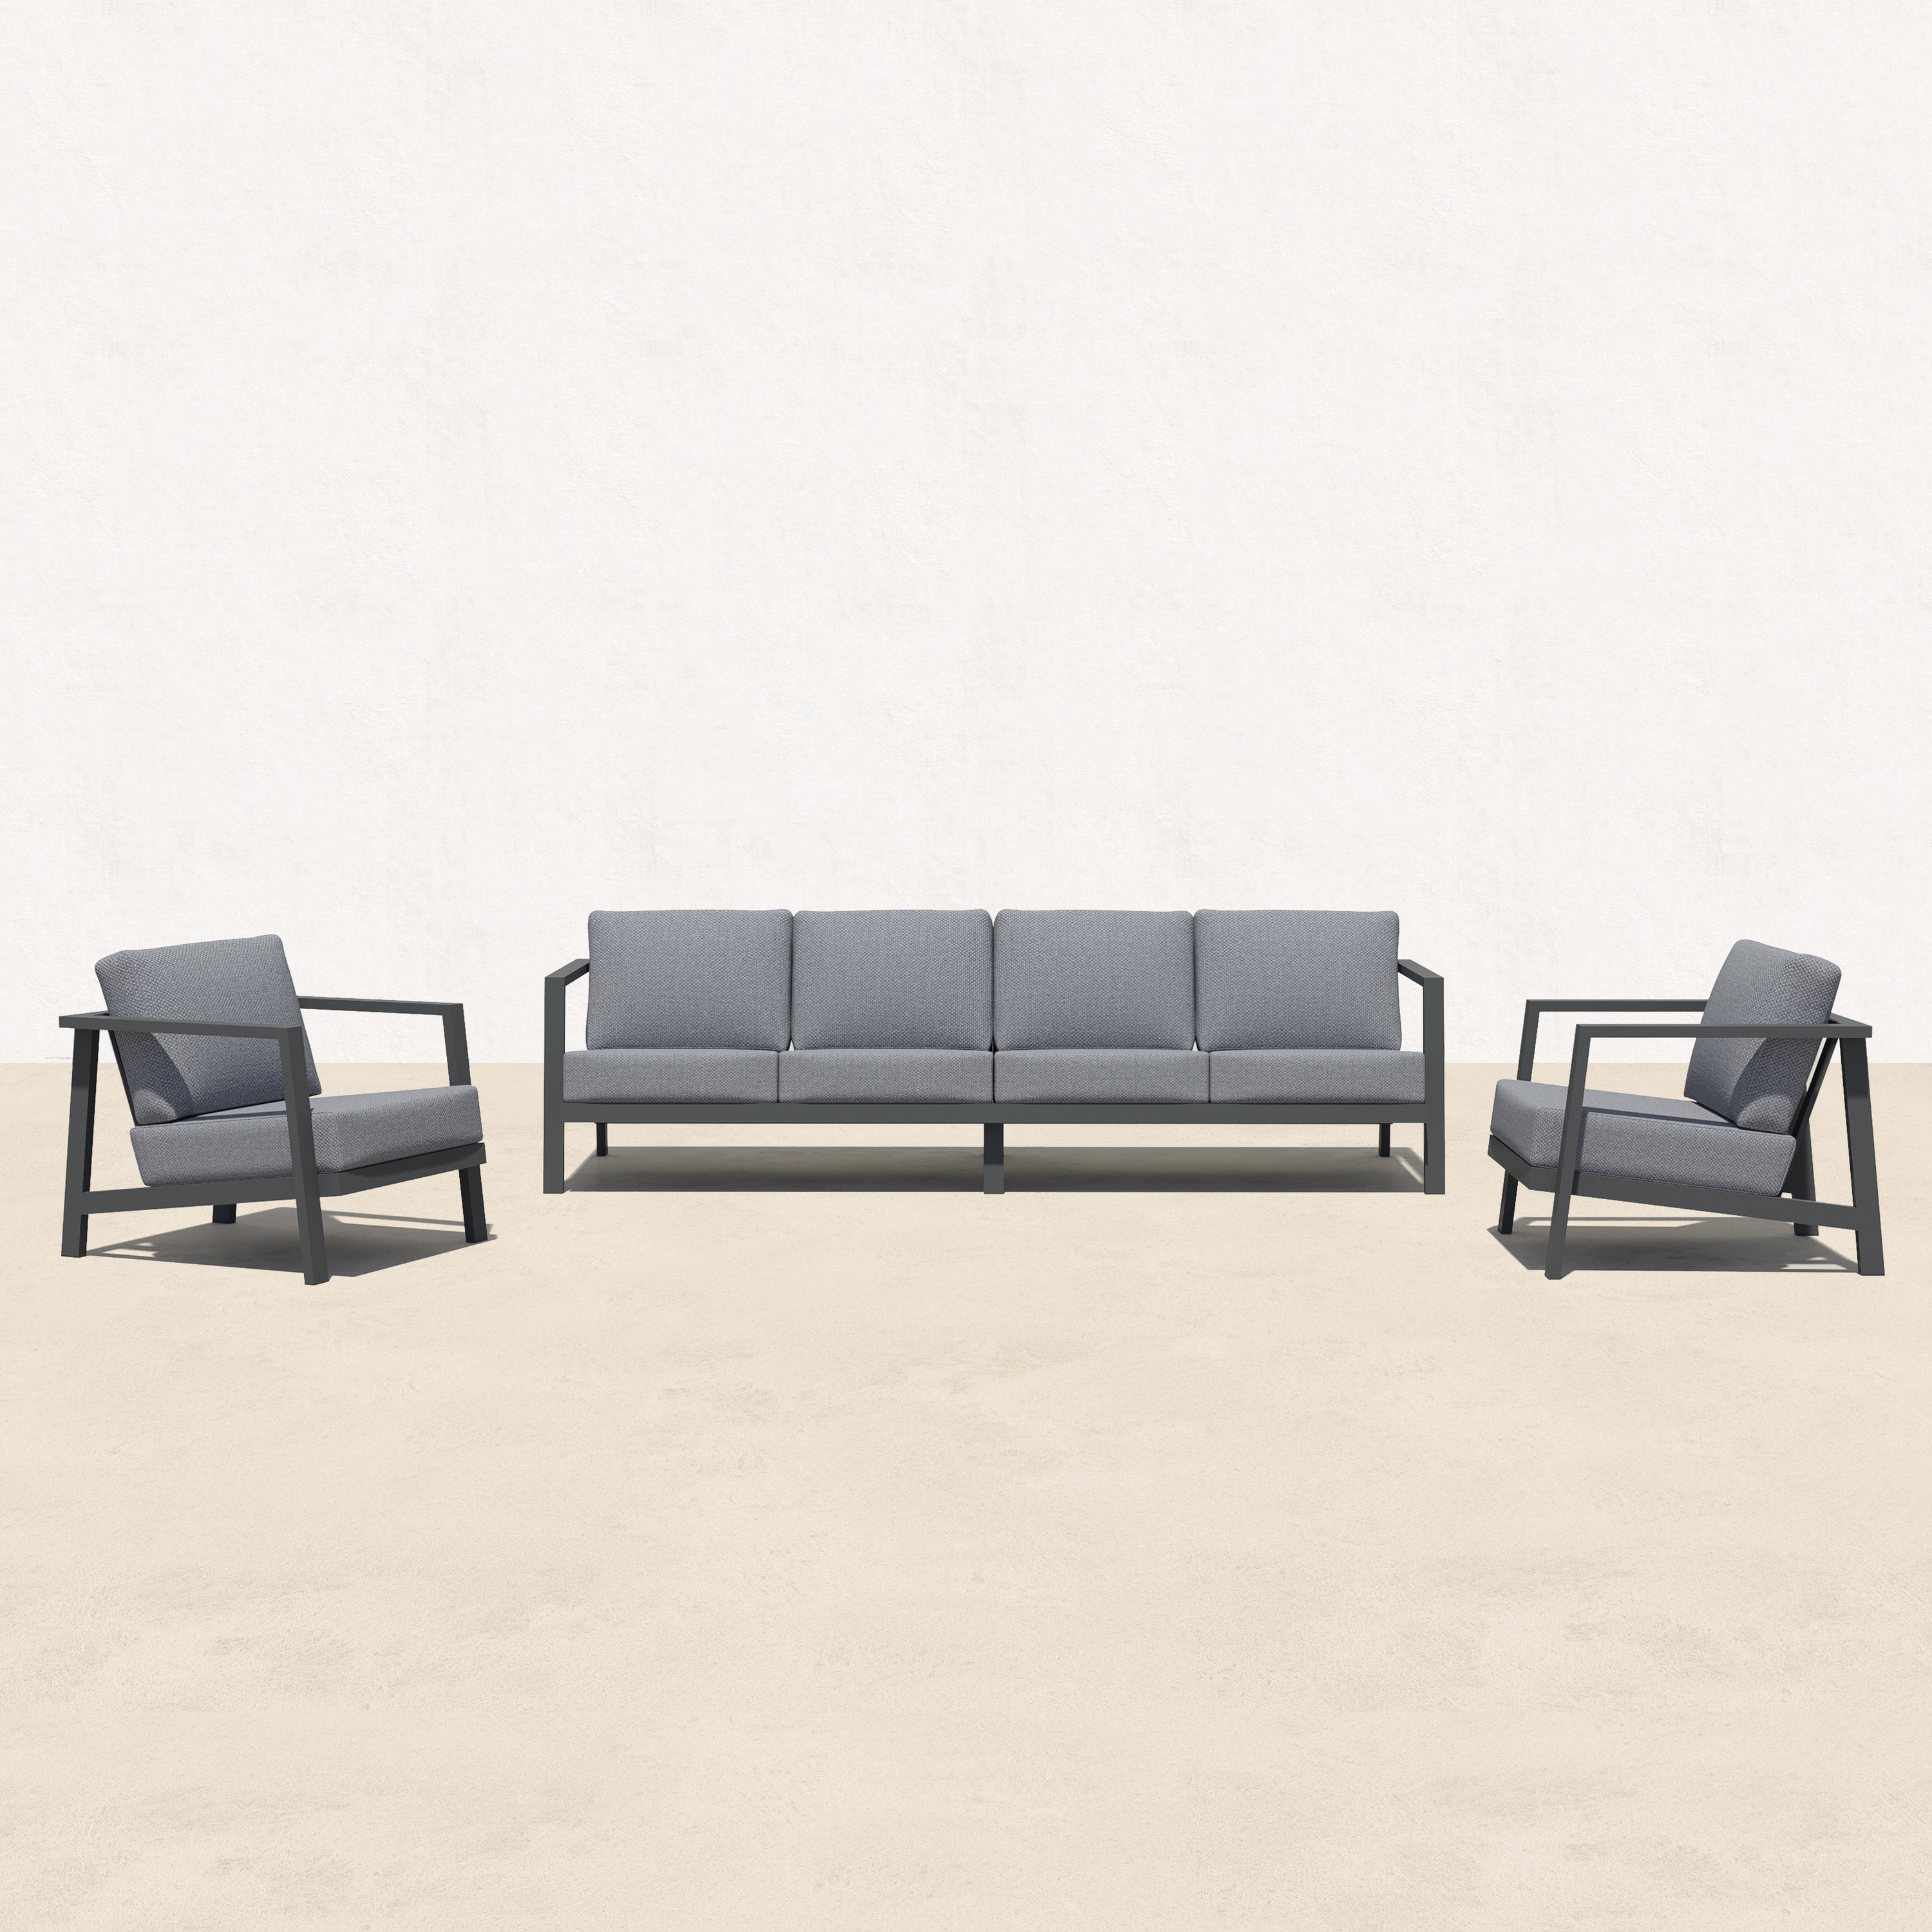 KATE Aluminum Furniture Outdoor with Armchairs - 6 Seat-Baeryon Furniture